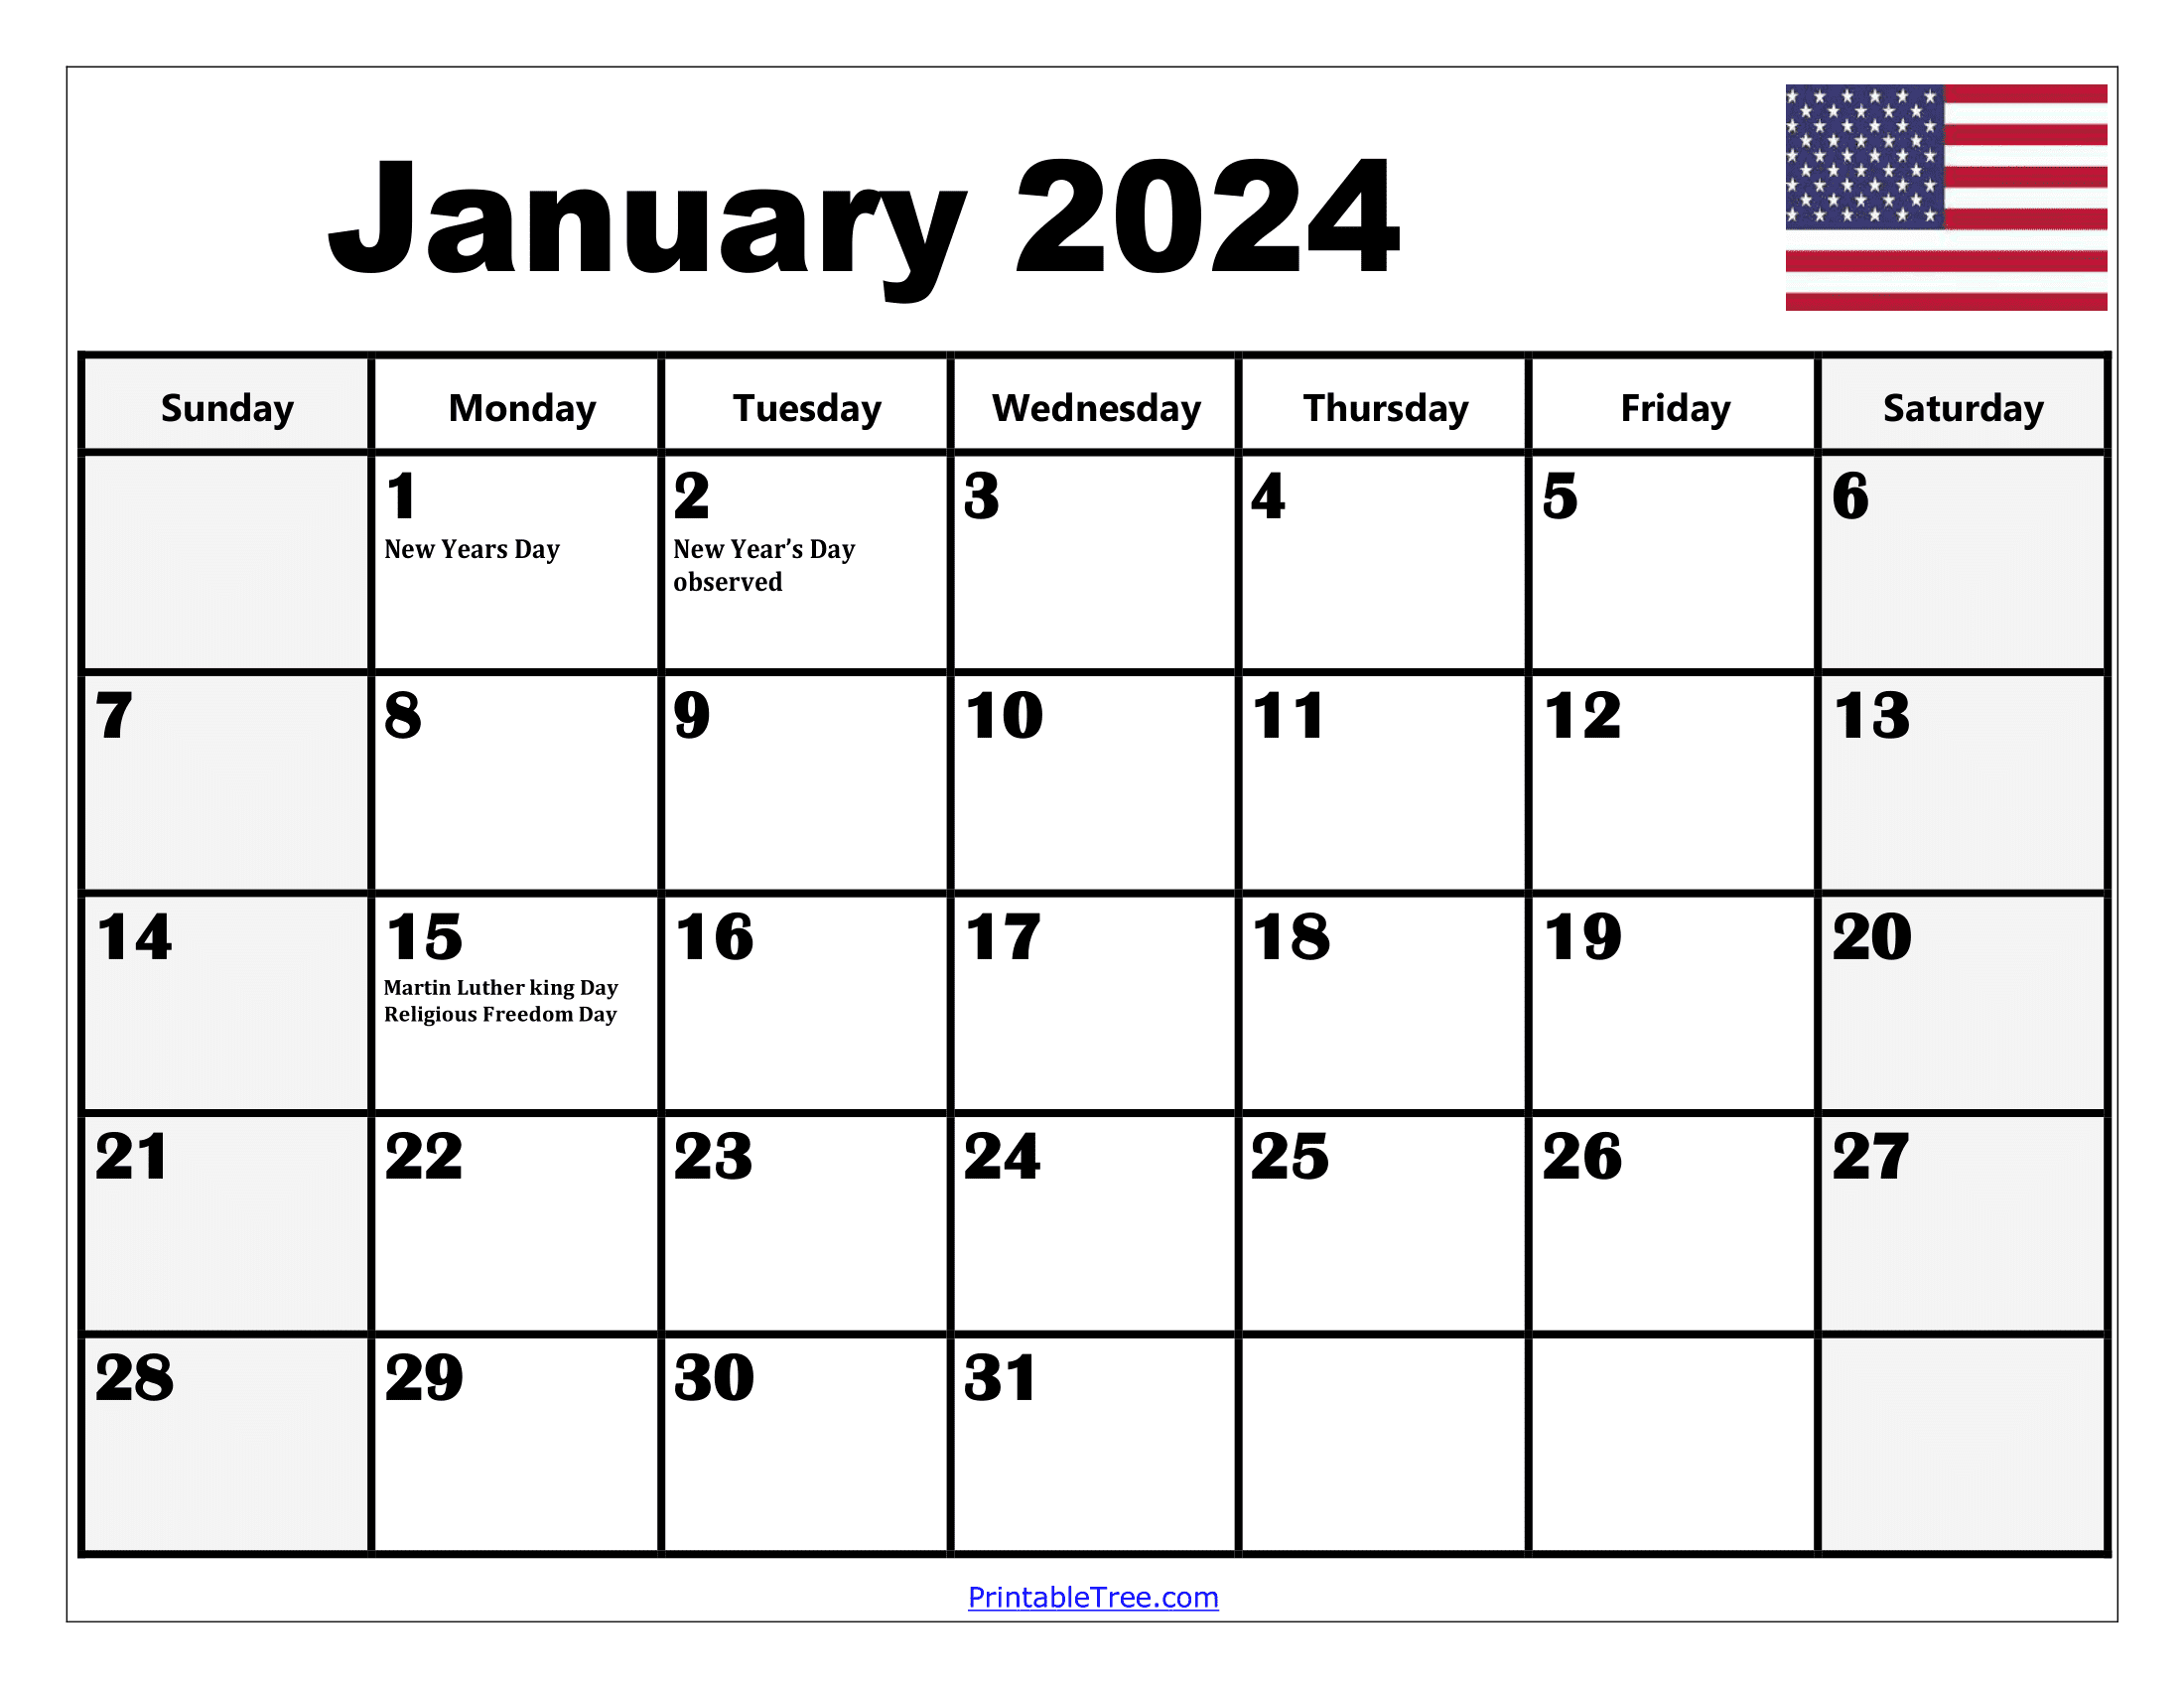 January 2024 Calendar Printable Pdf Template With Holidays for Free Printable January 2024 Calendar With Holidays